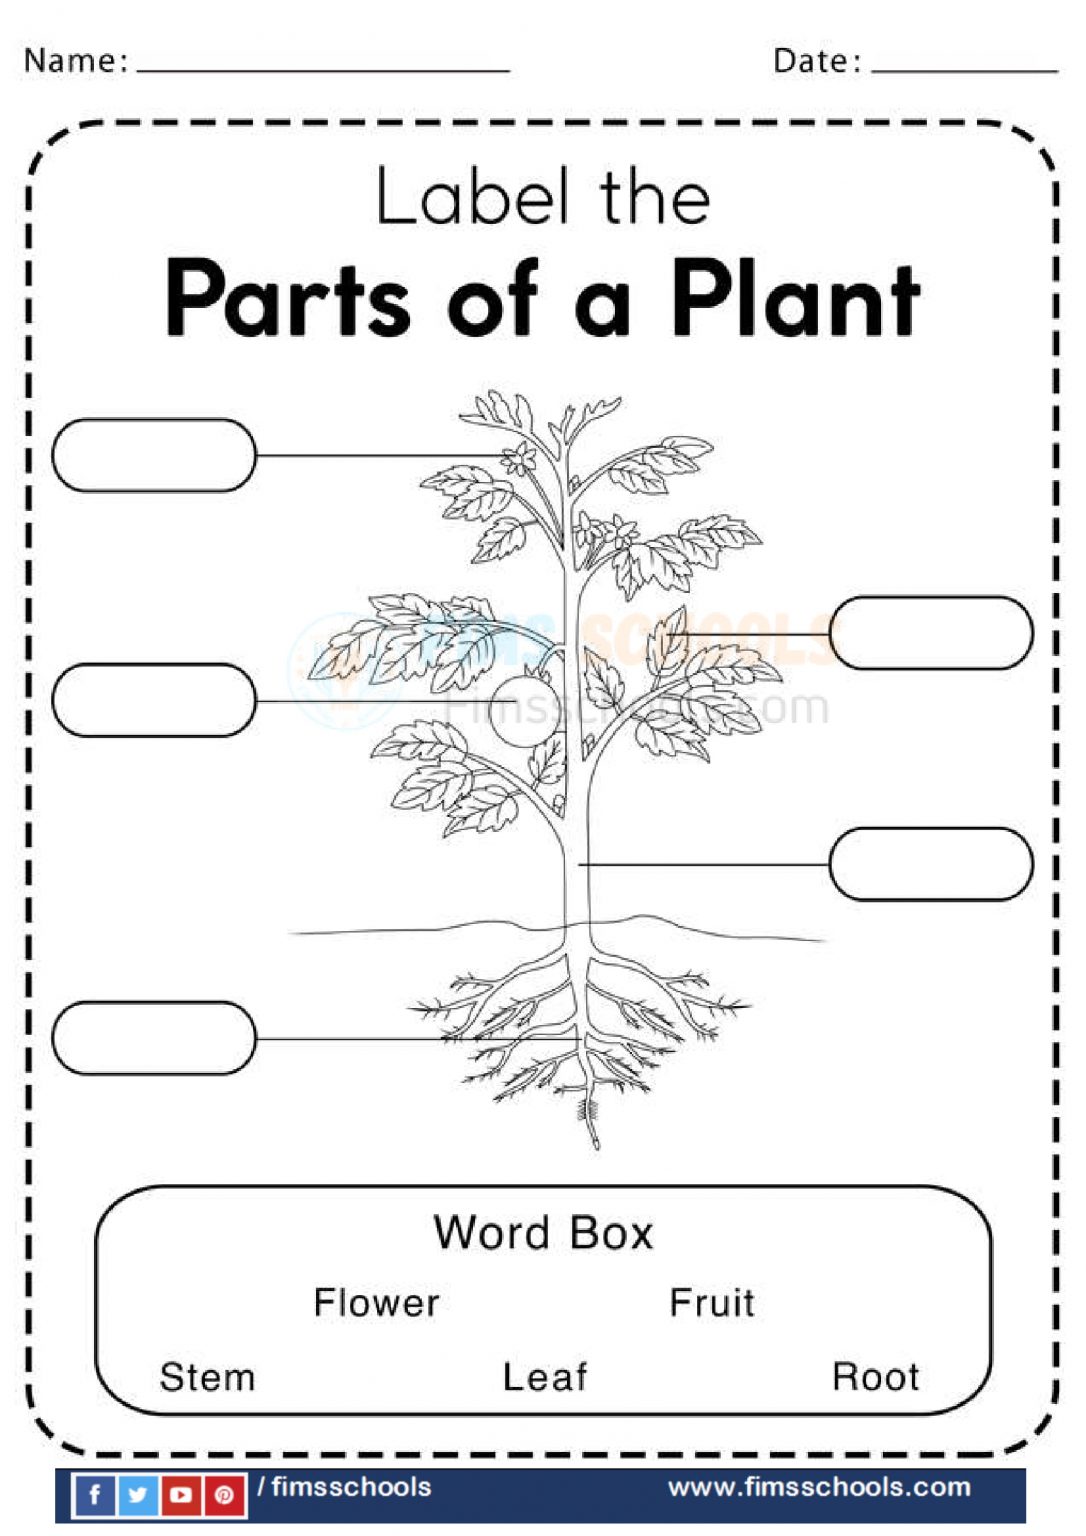 homework about plants